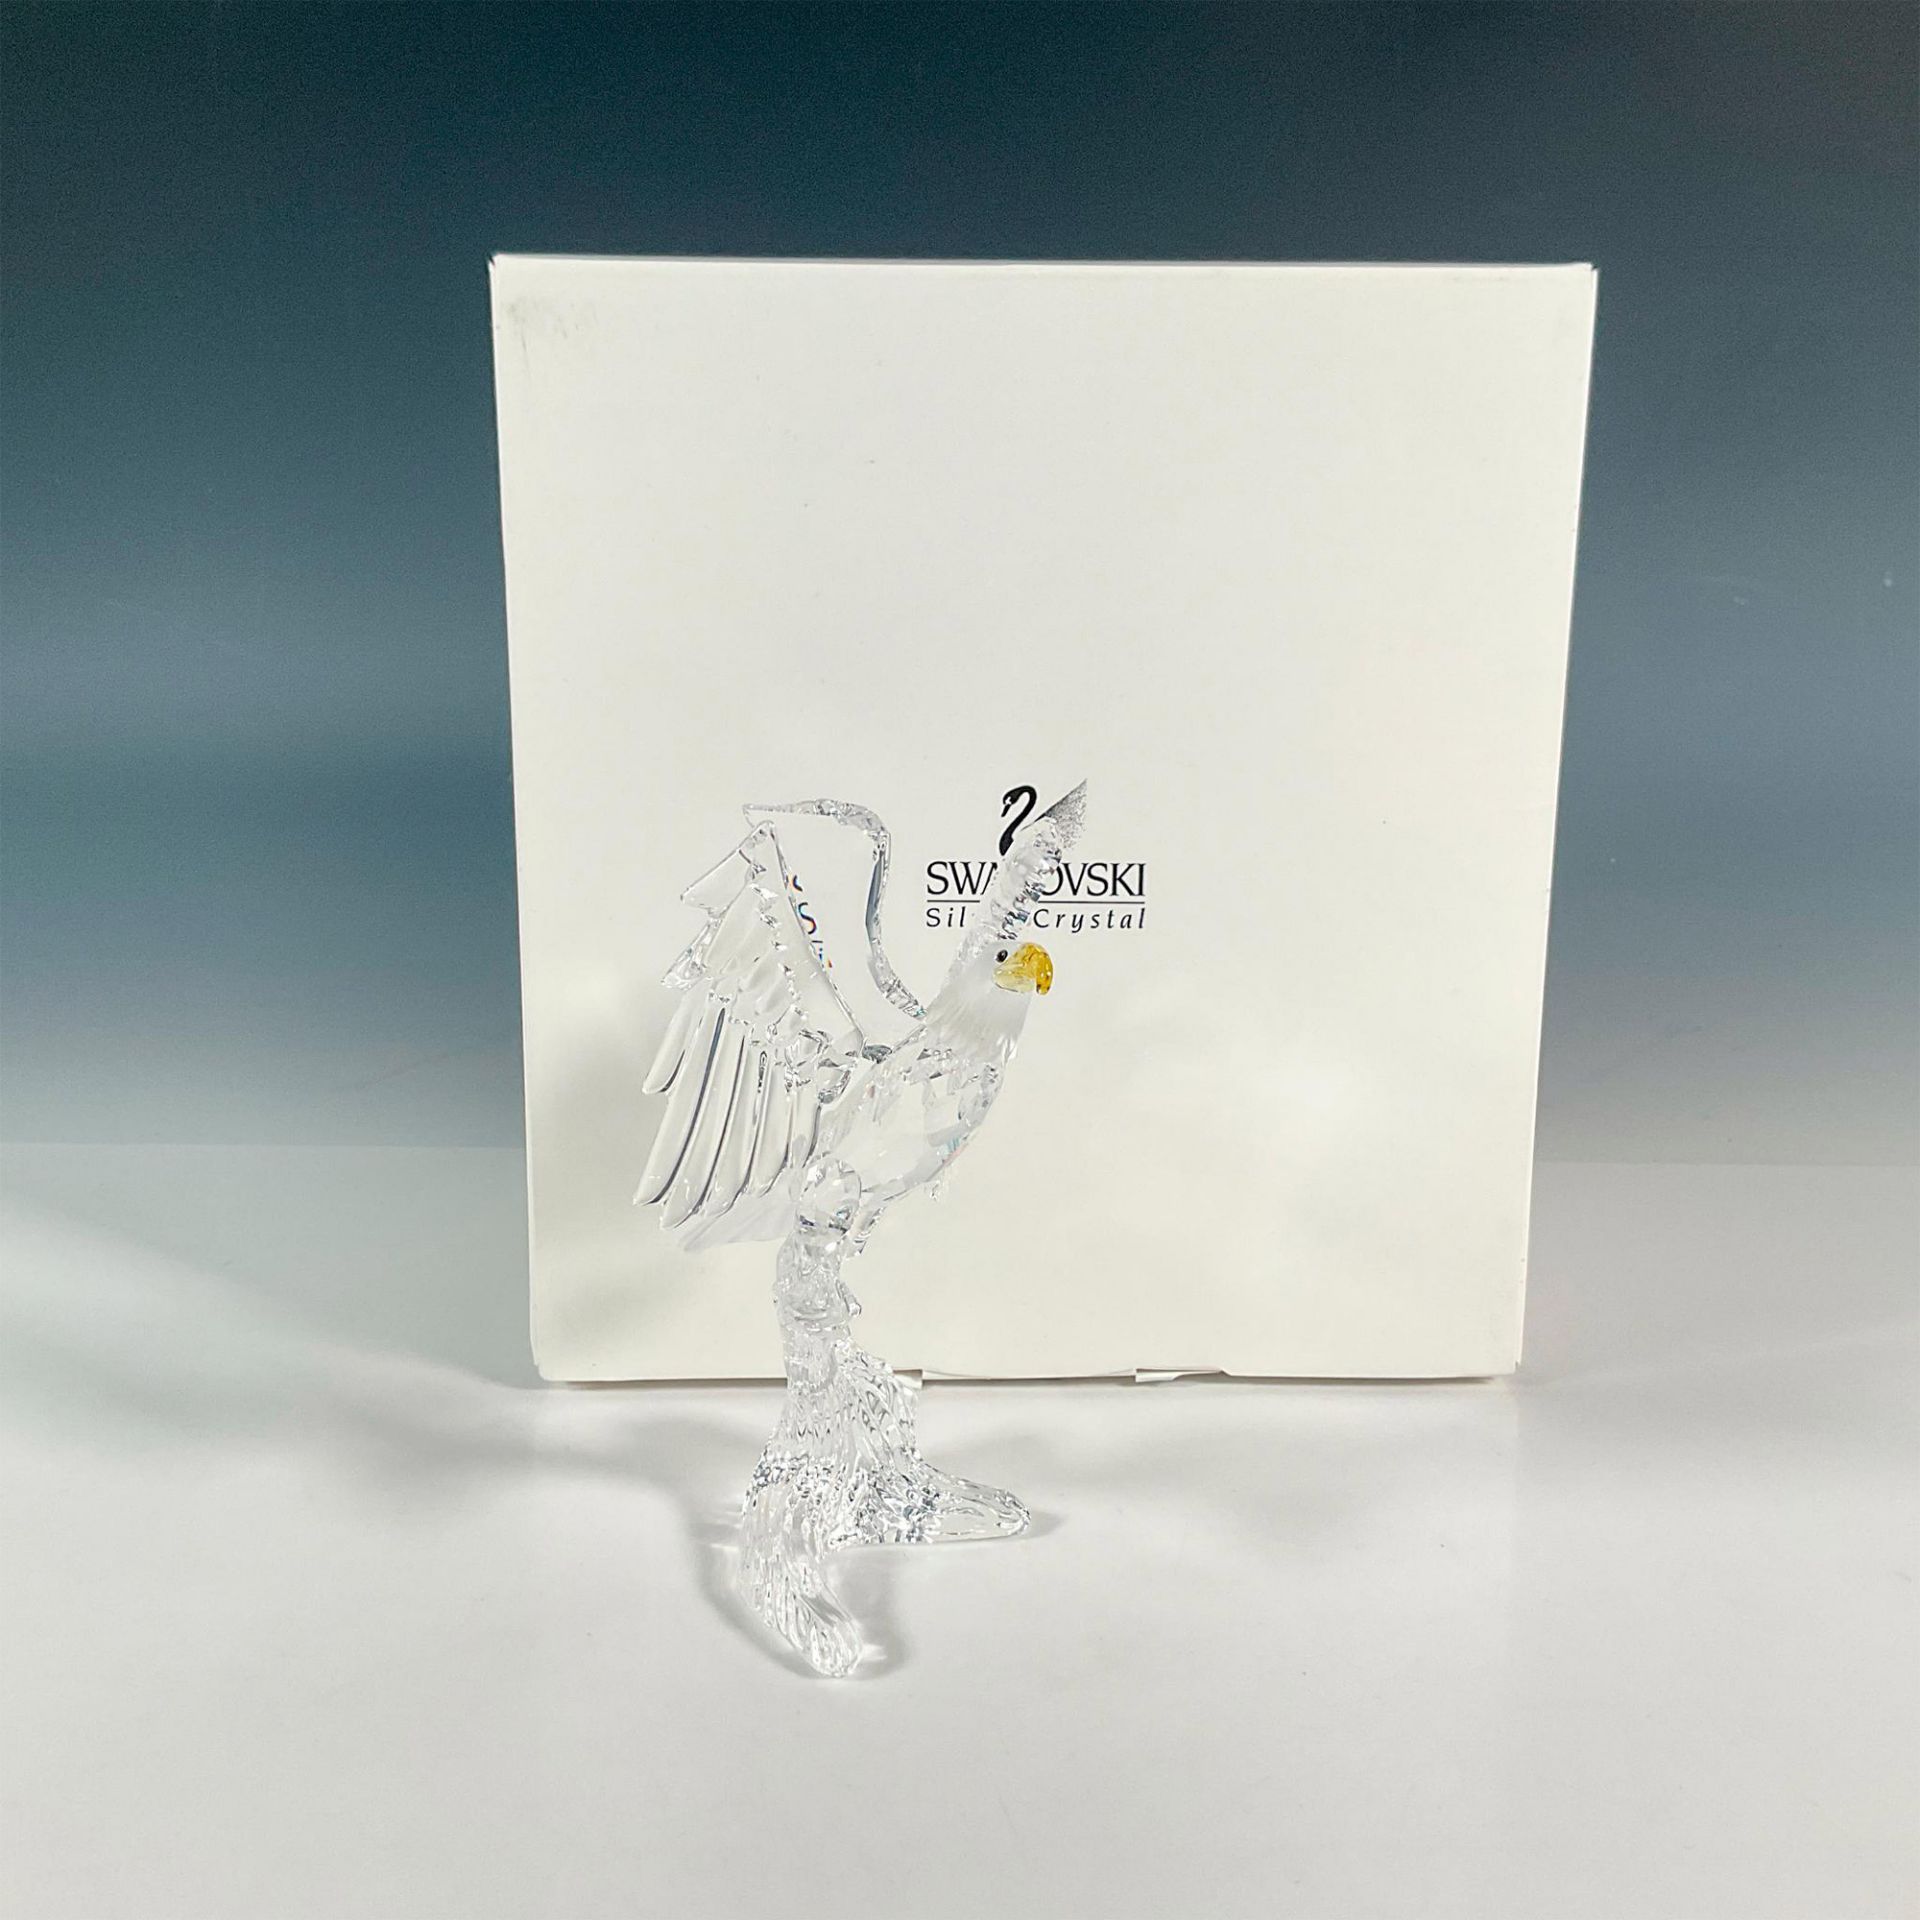 Swarovski Silver Crystal Figurine, Bald Eagle - Image 4 of 4